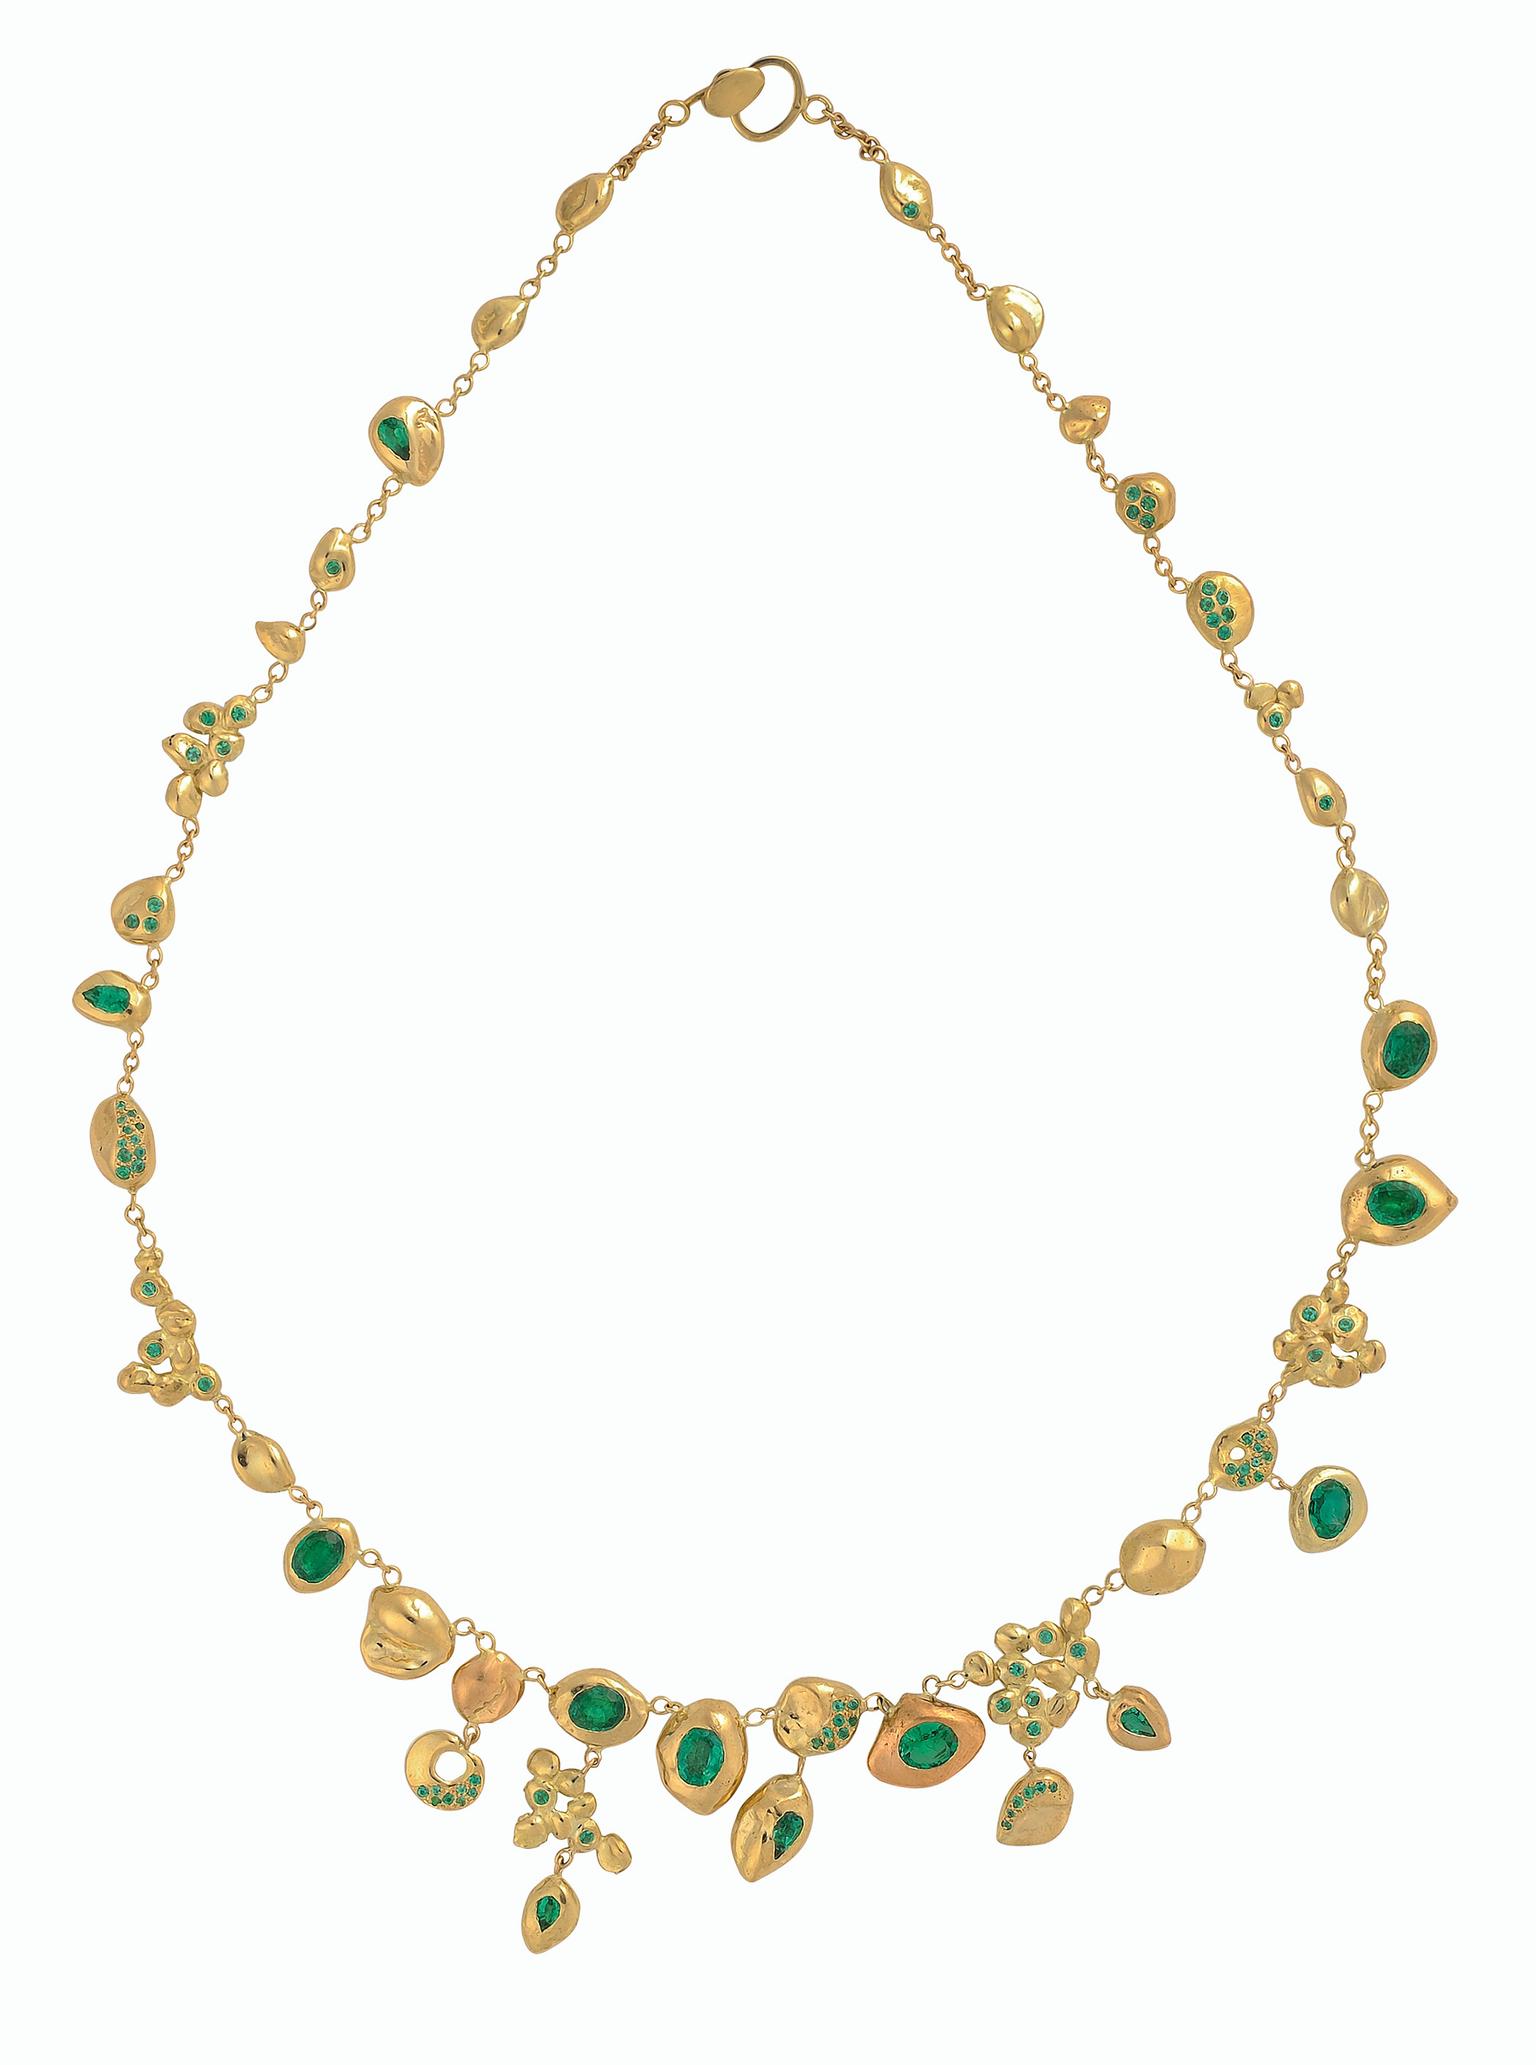 Natasha Collis for Gemfields Emerald Necklace_20131031_Zoom